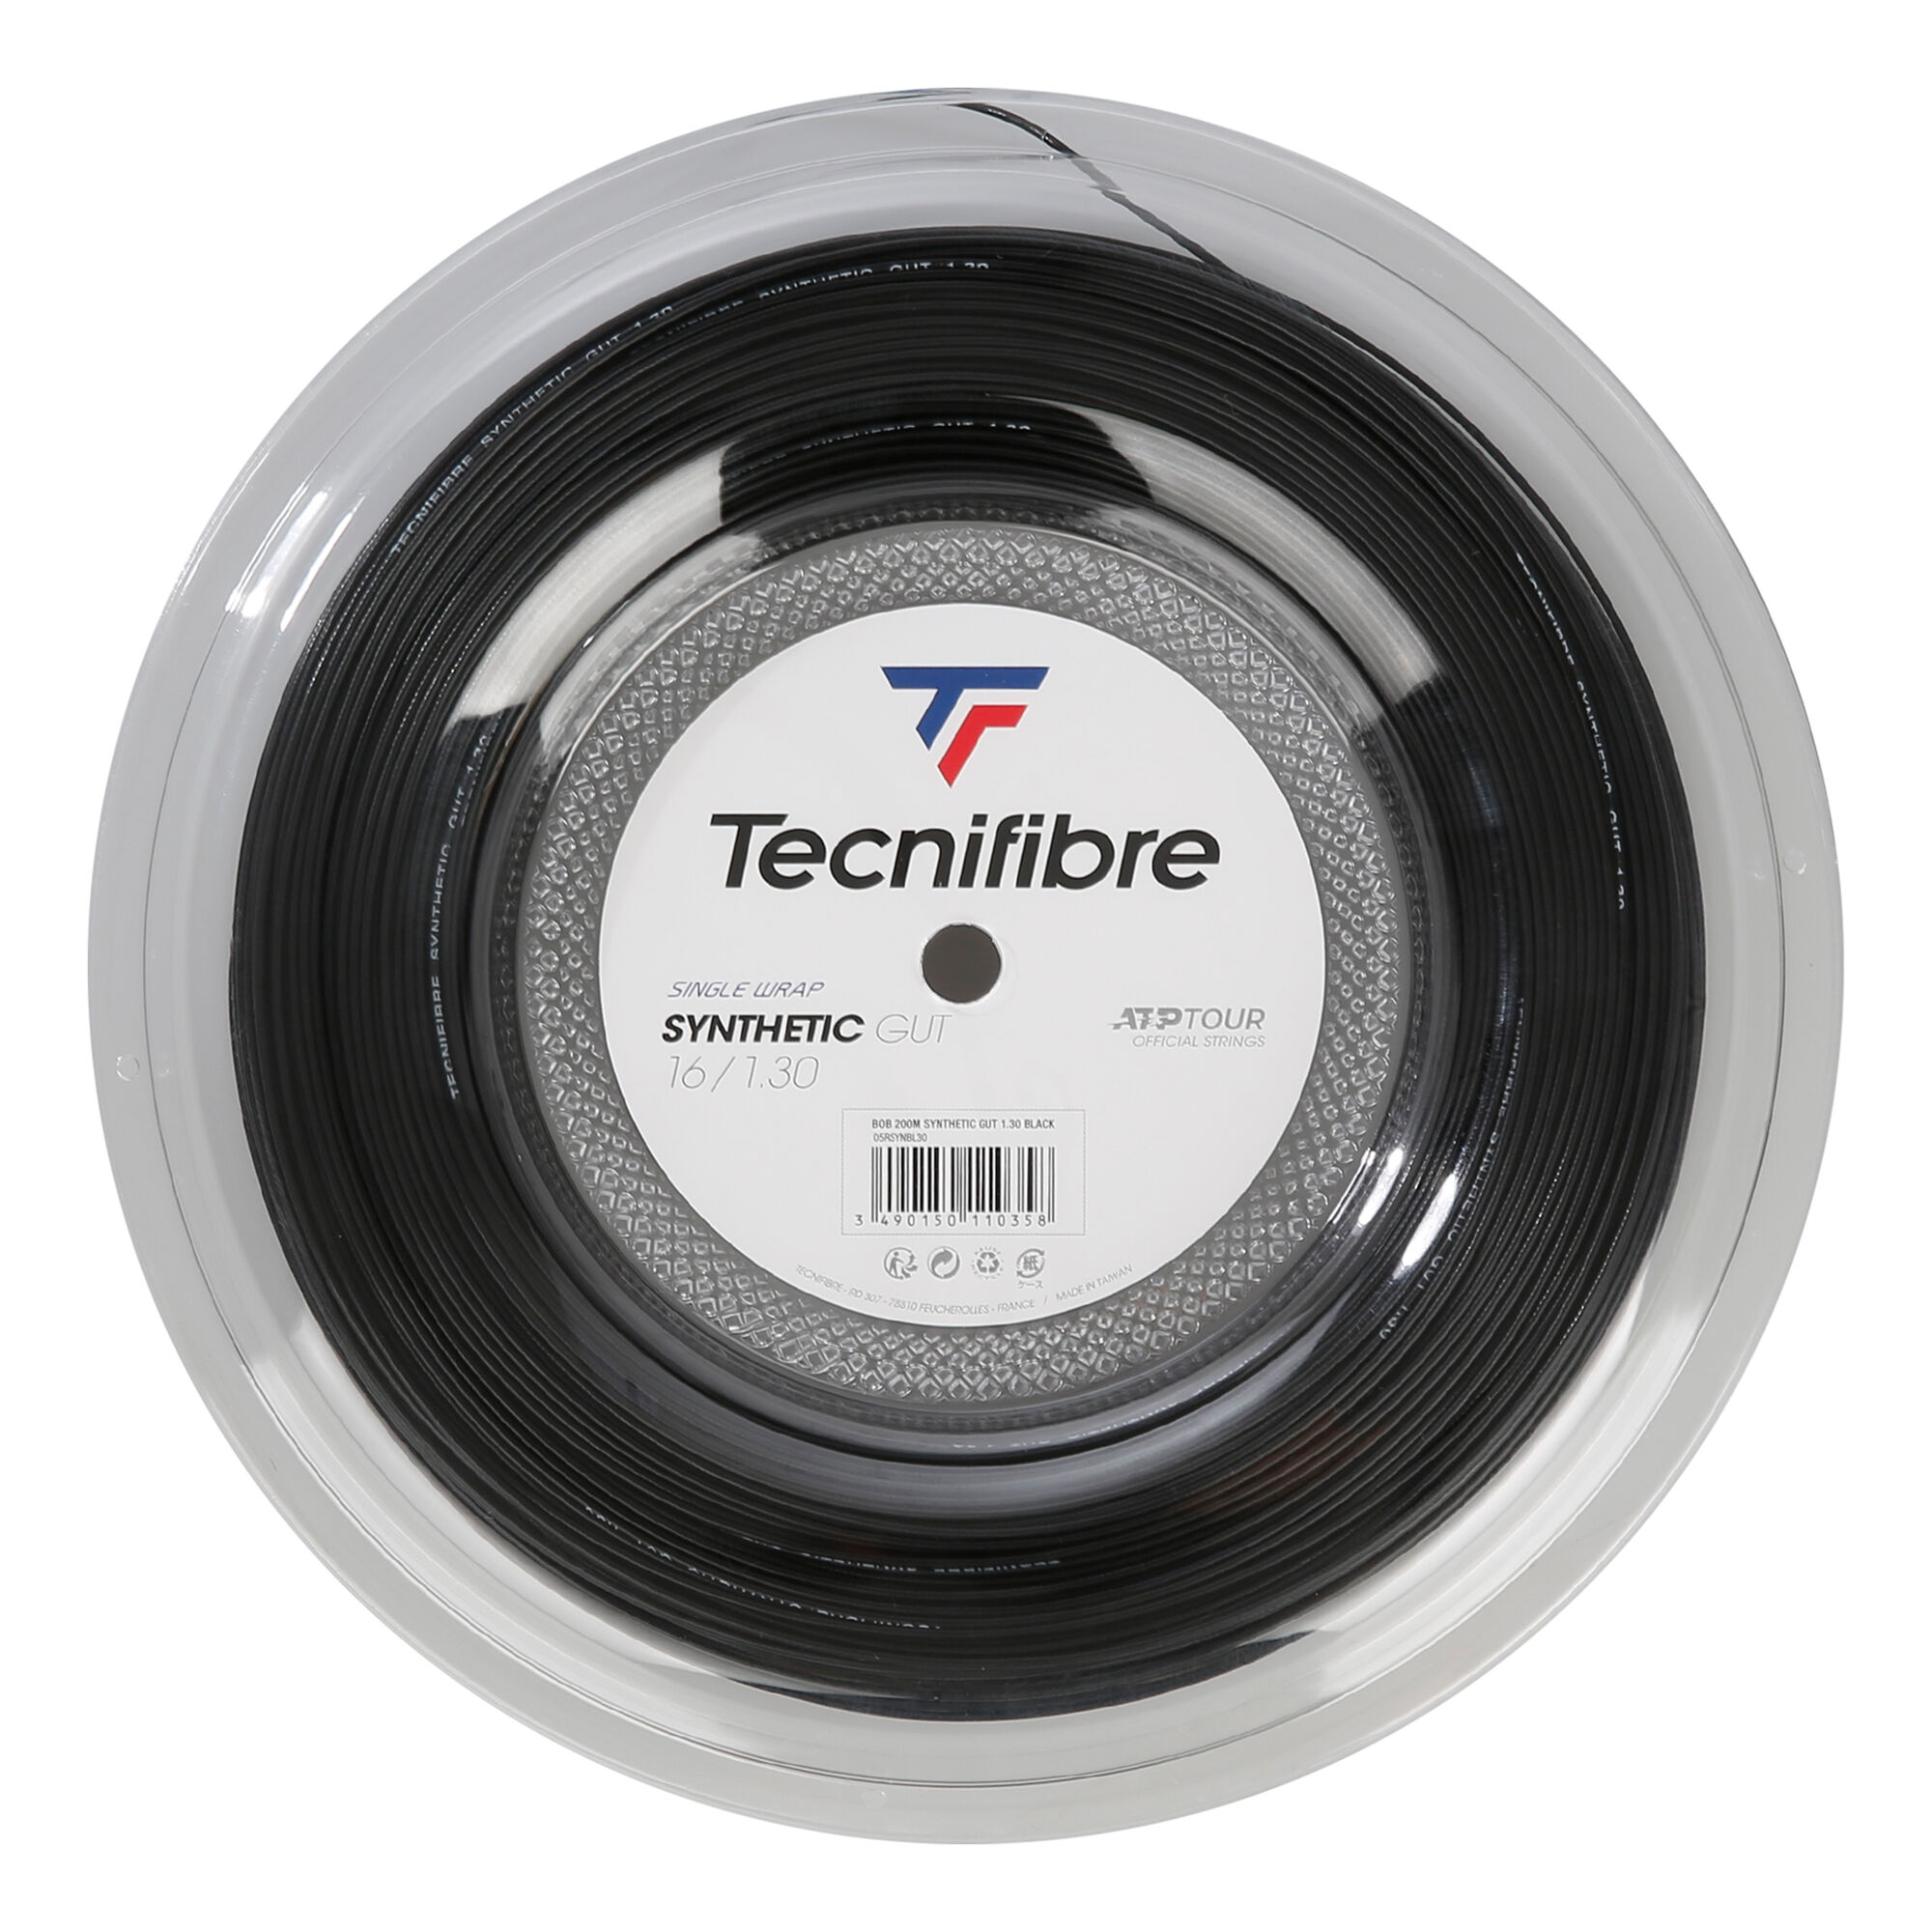 Buy Tecnifibre Synthetic Gut 200m String Reel Black online